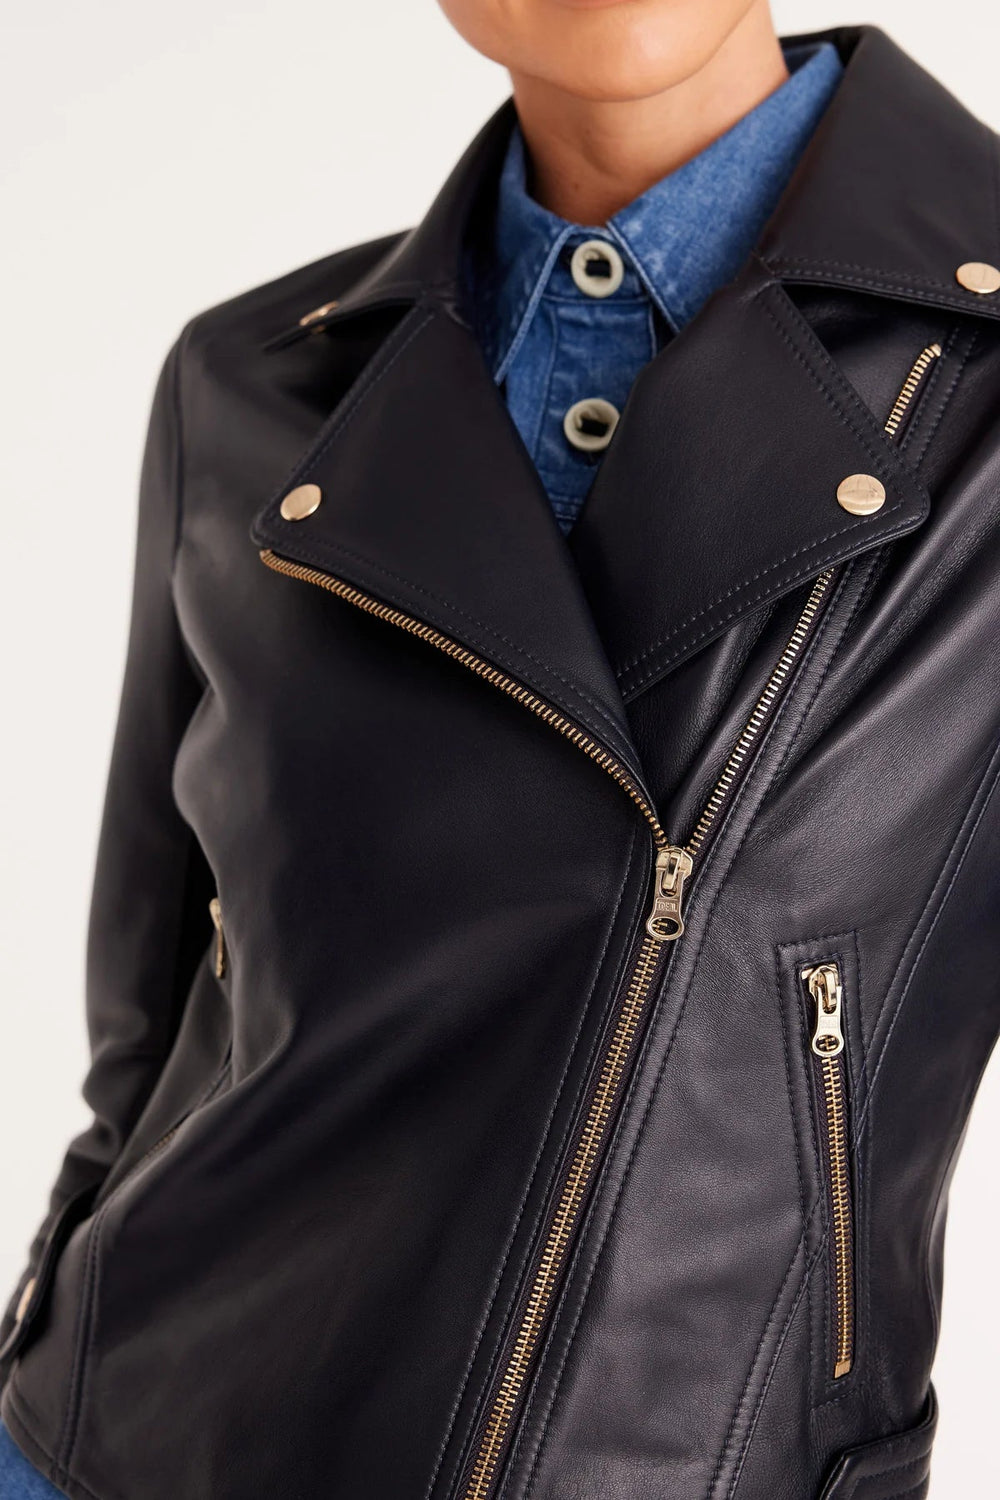 Cable Melbourne Smith Leather Biker Jacket - Navy - Shop 9